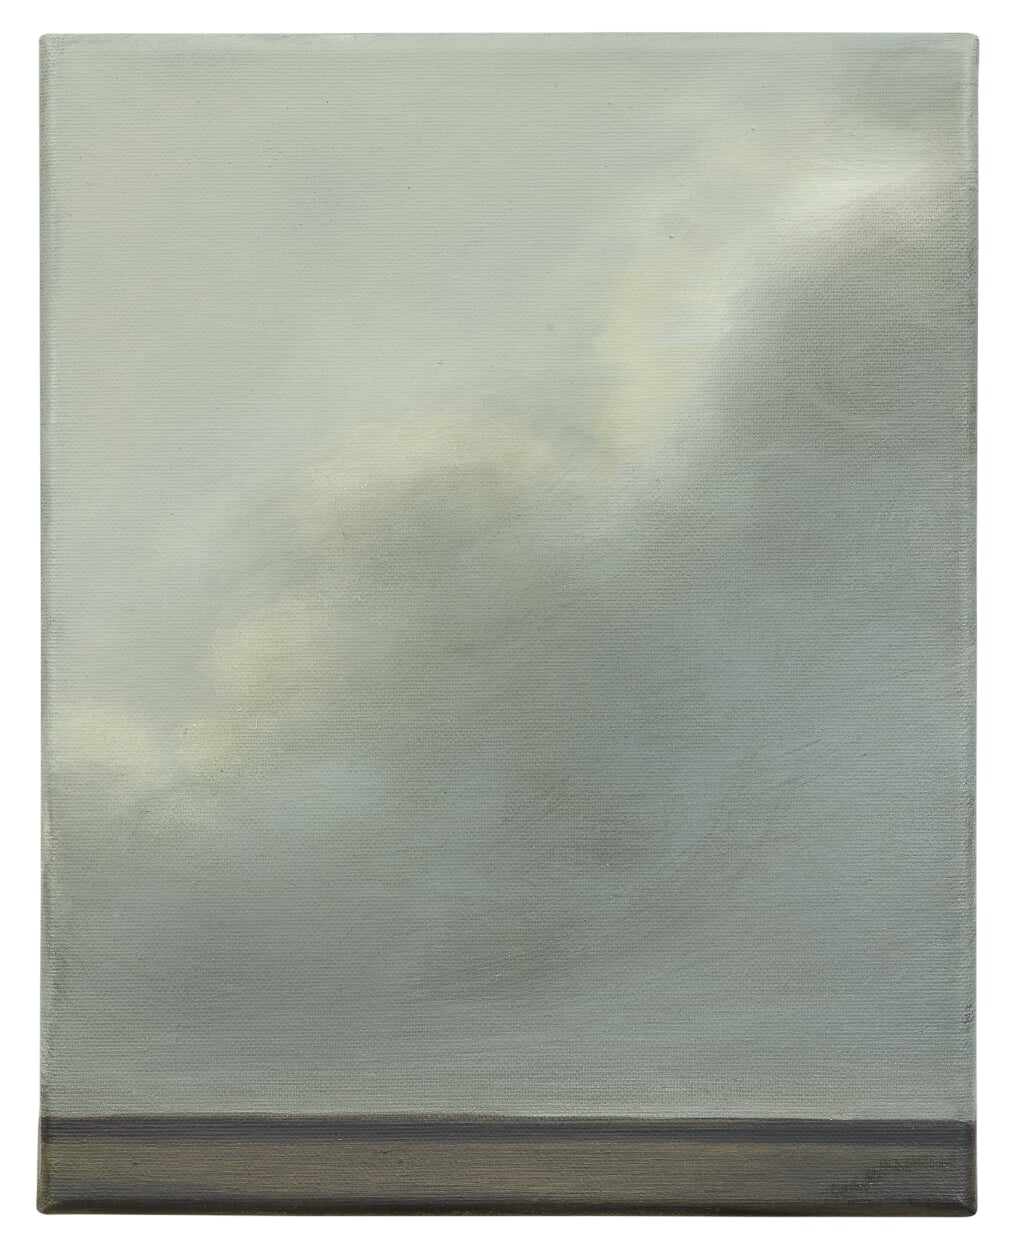 Linde Leijh, zonder titel, olieverf op doek, 2019, 300 x 240 mm.